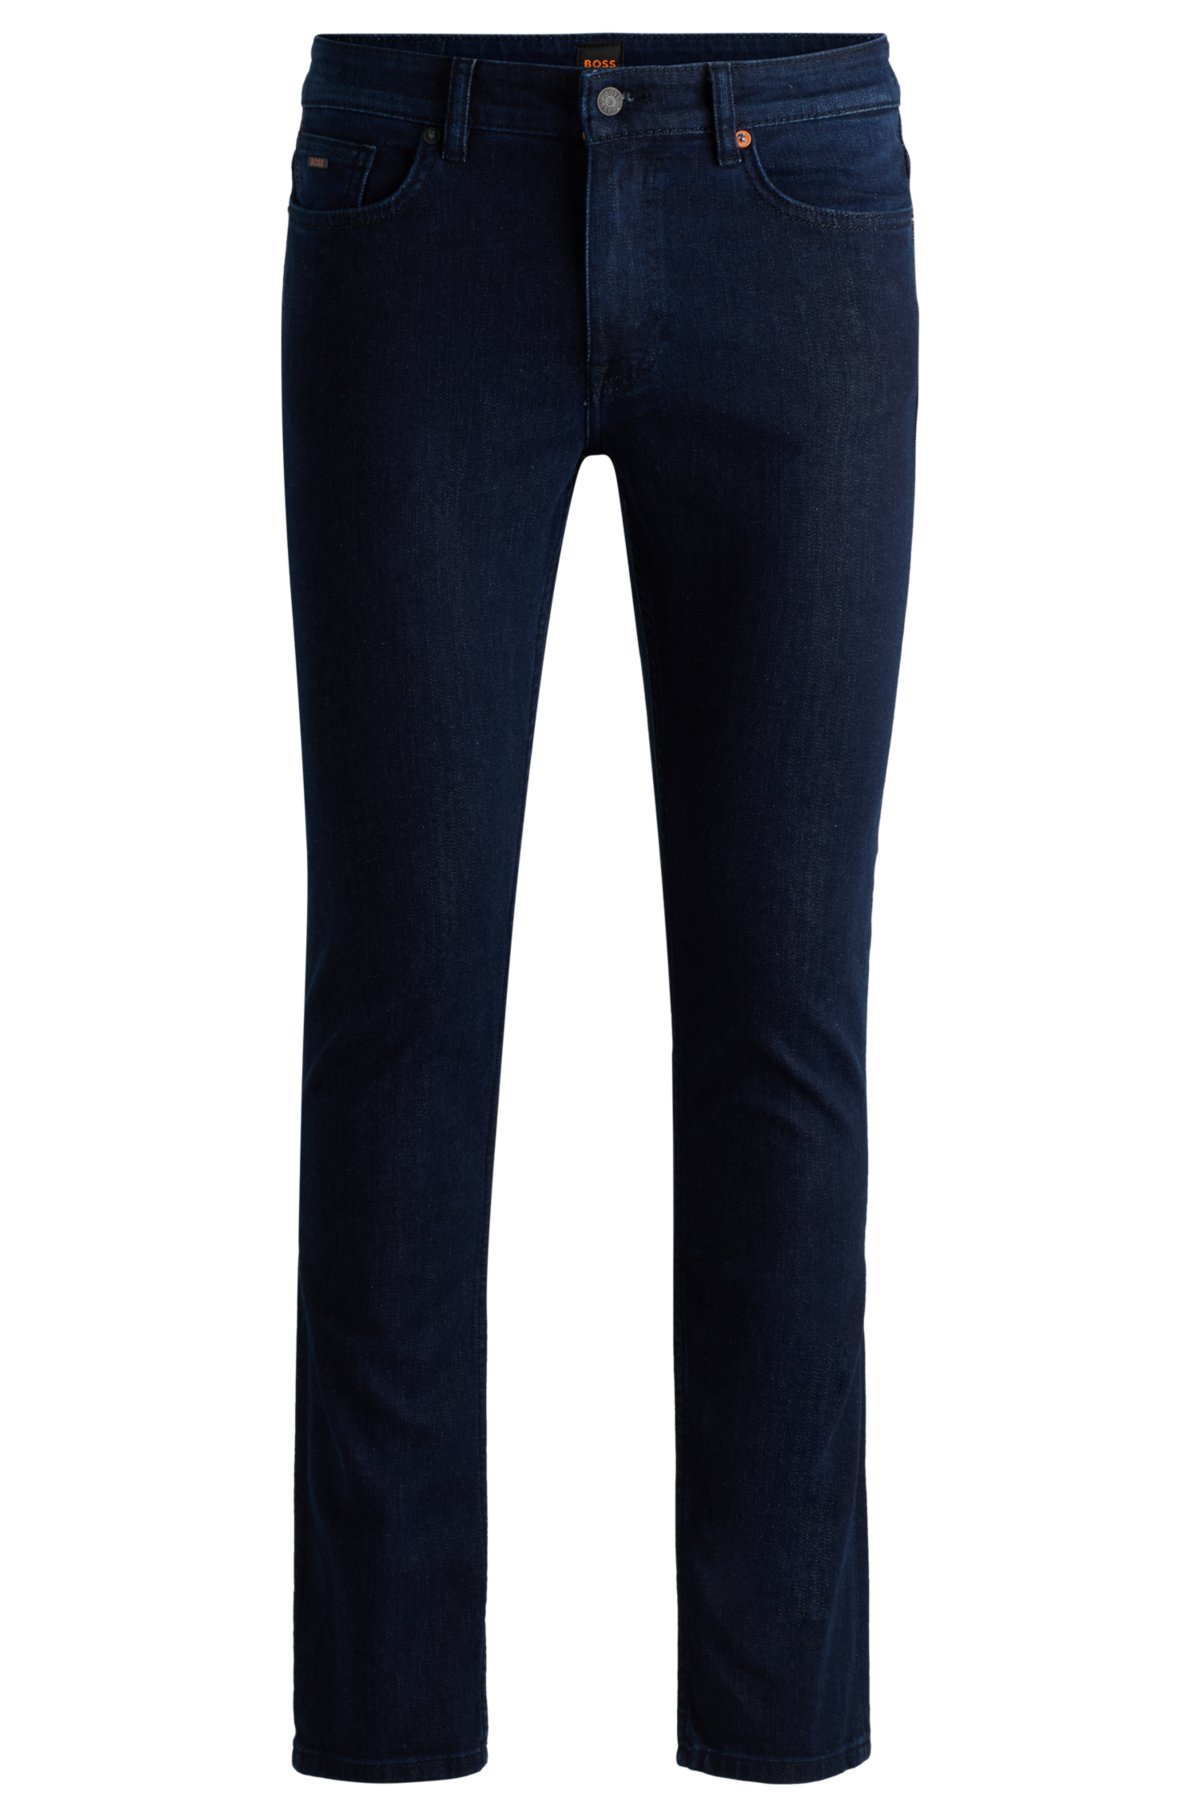 HUGO - Tapered-fit jeans in blue comfort-stretch denim